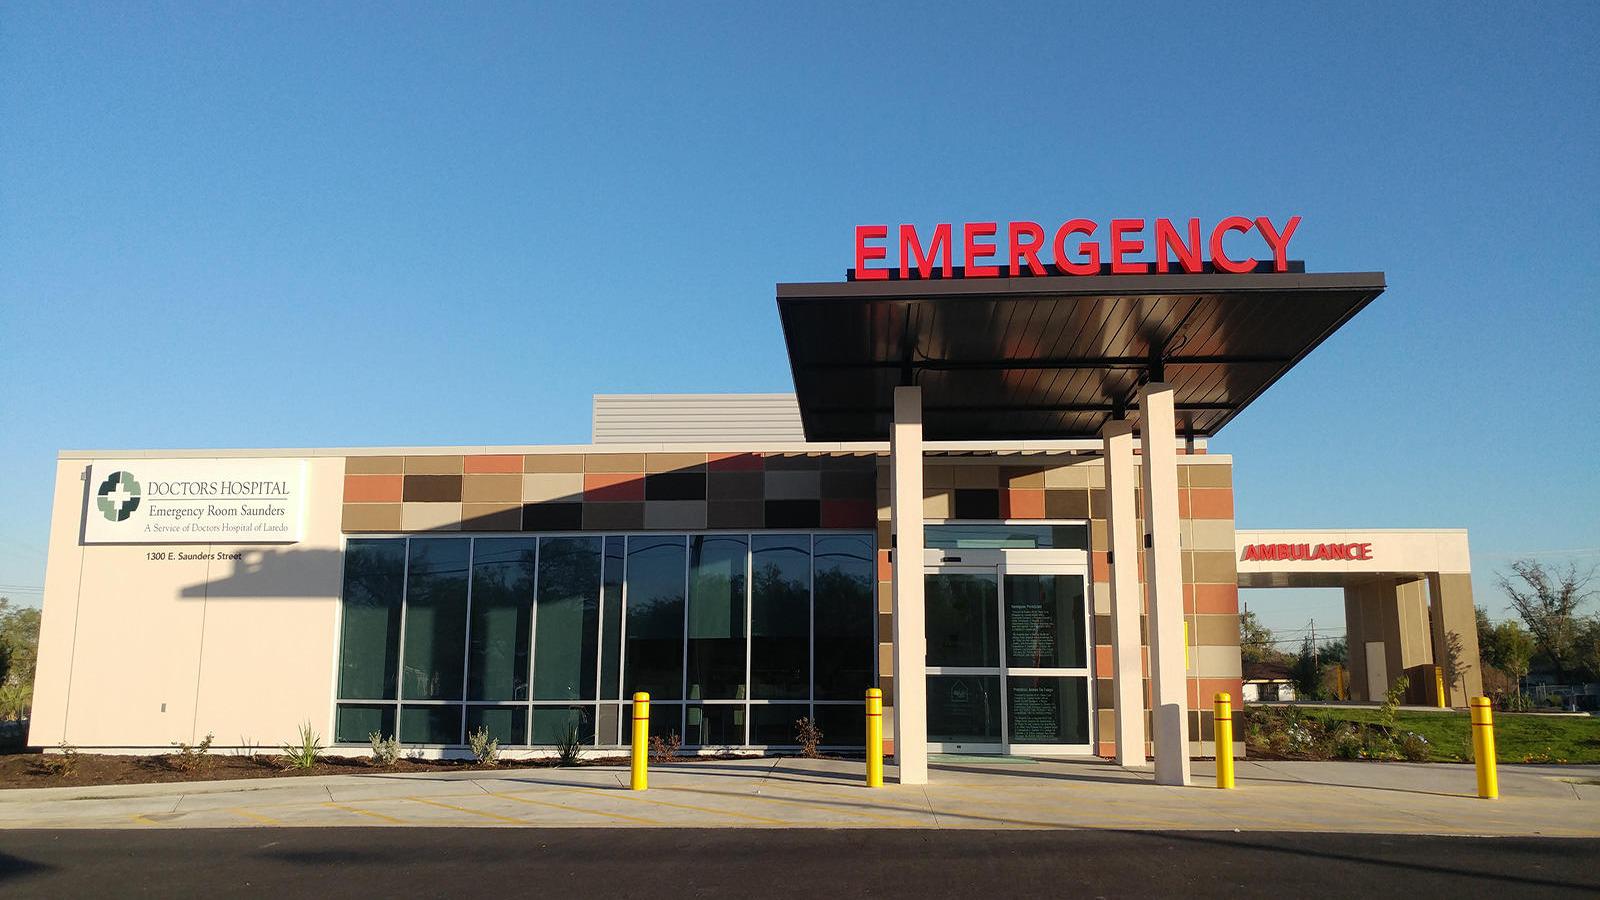 Doctors Hospital Emergency Room Saunders - Laredo, TX 78041 - (956)815-4500 | ShowMeLocal.com